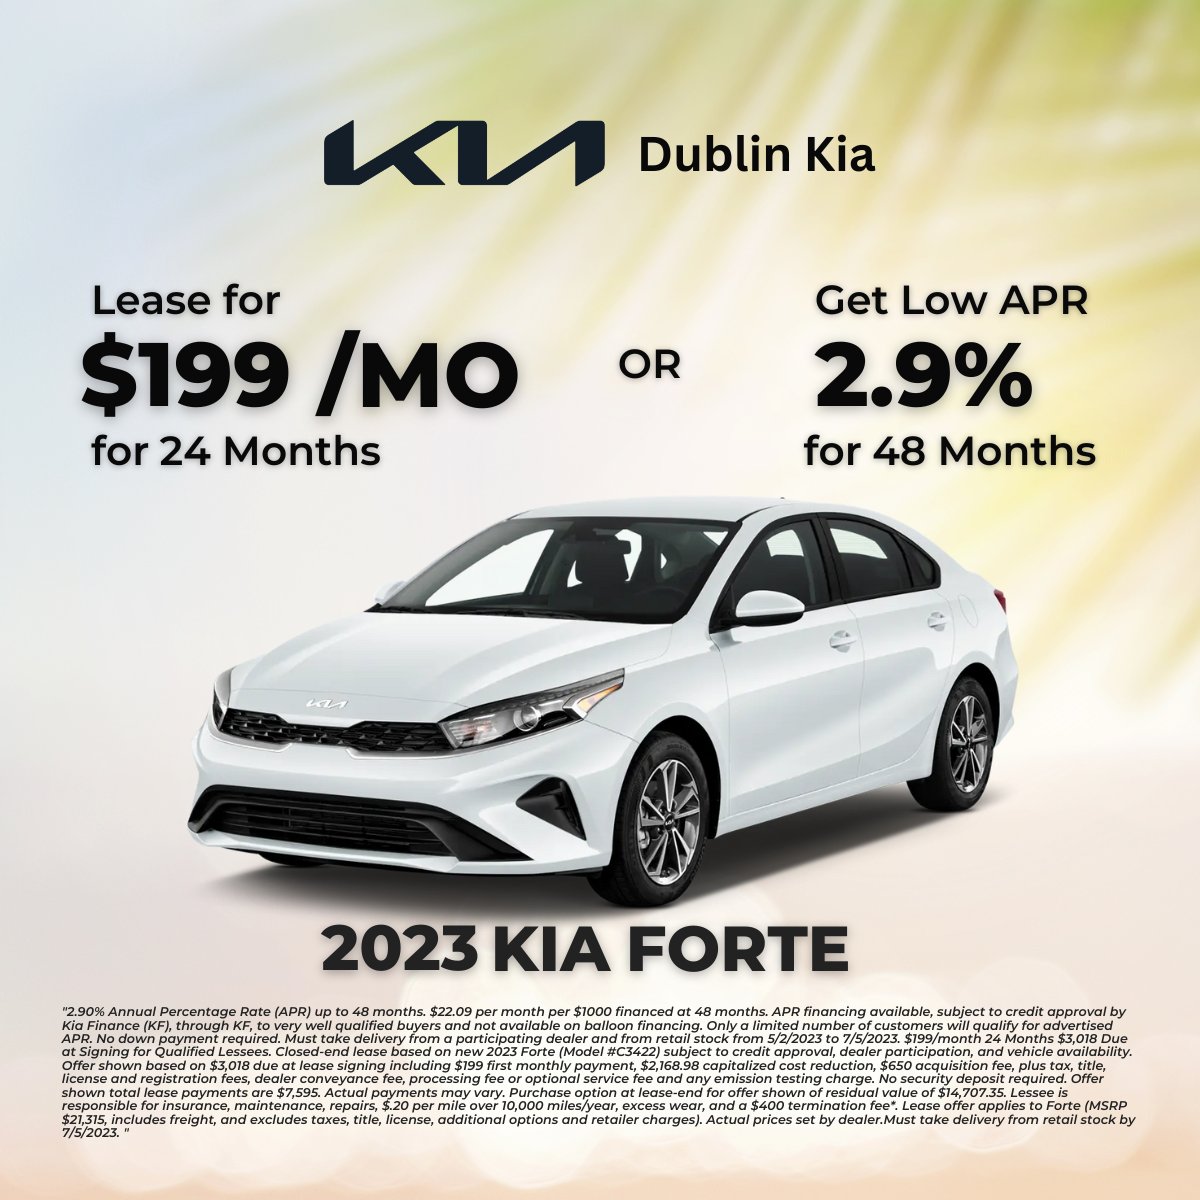 🌞🔥 Hot deals for summer! Lease your 2023 Kia Forte for only $199/month for 24 Mos and $3,018 Down OR Get 2.9% APR For Up To 48 Months 😎☀️

Shop For Yours at 👉 p1.tt/3ROxcJg

#dublinkia #dublinca #kia #kiadealership #newkia #kias #kiaforsale #kiadealer #newkias